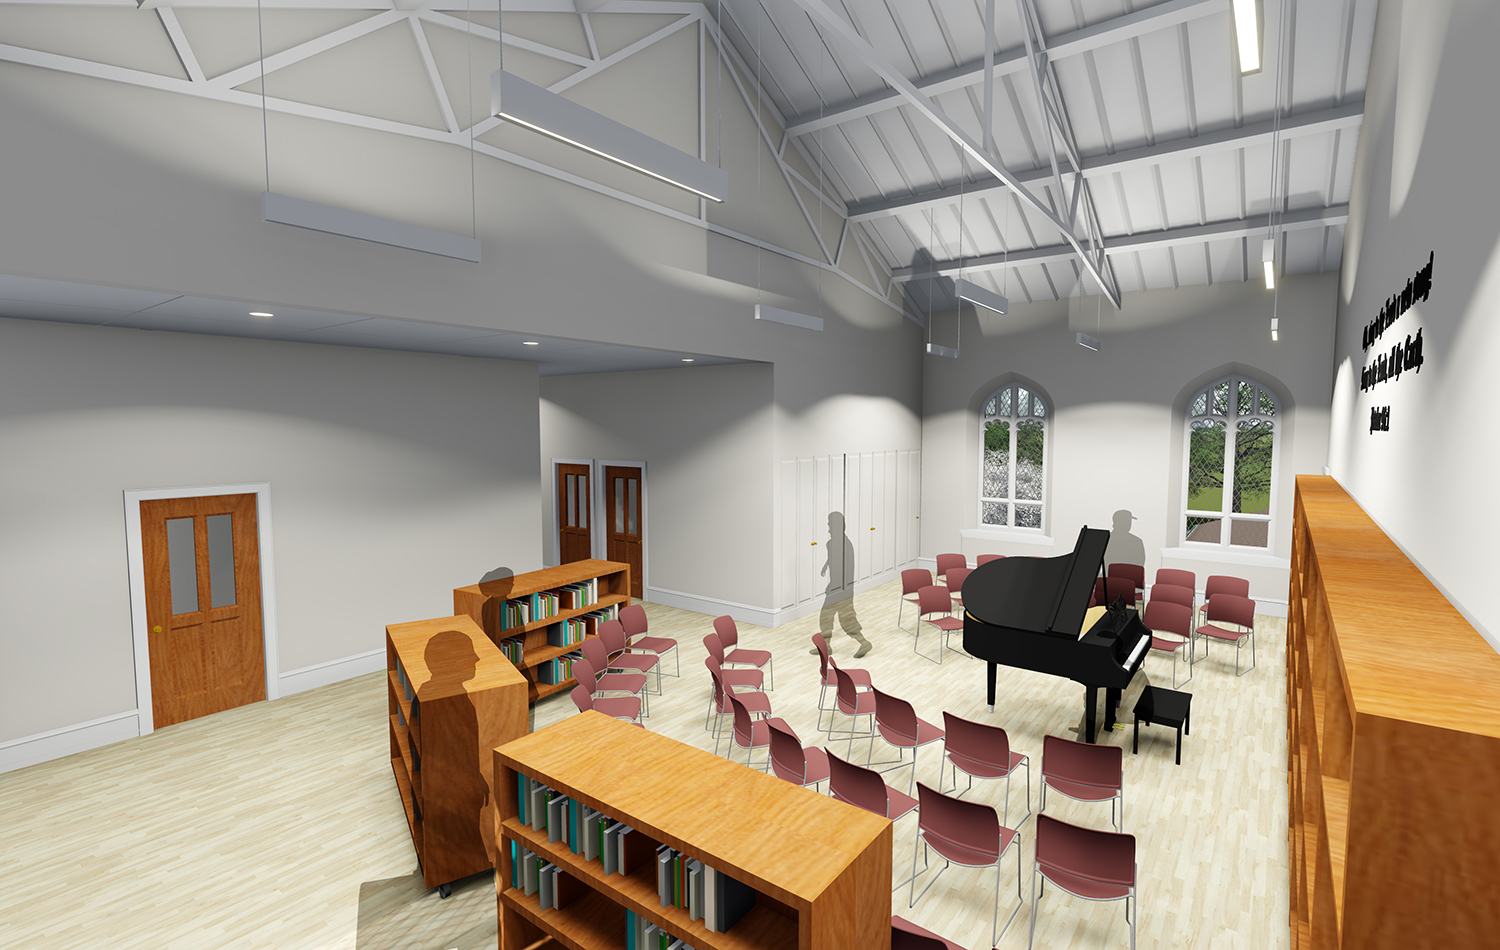 Interior_Choir_Room1.jpg